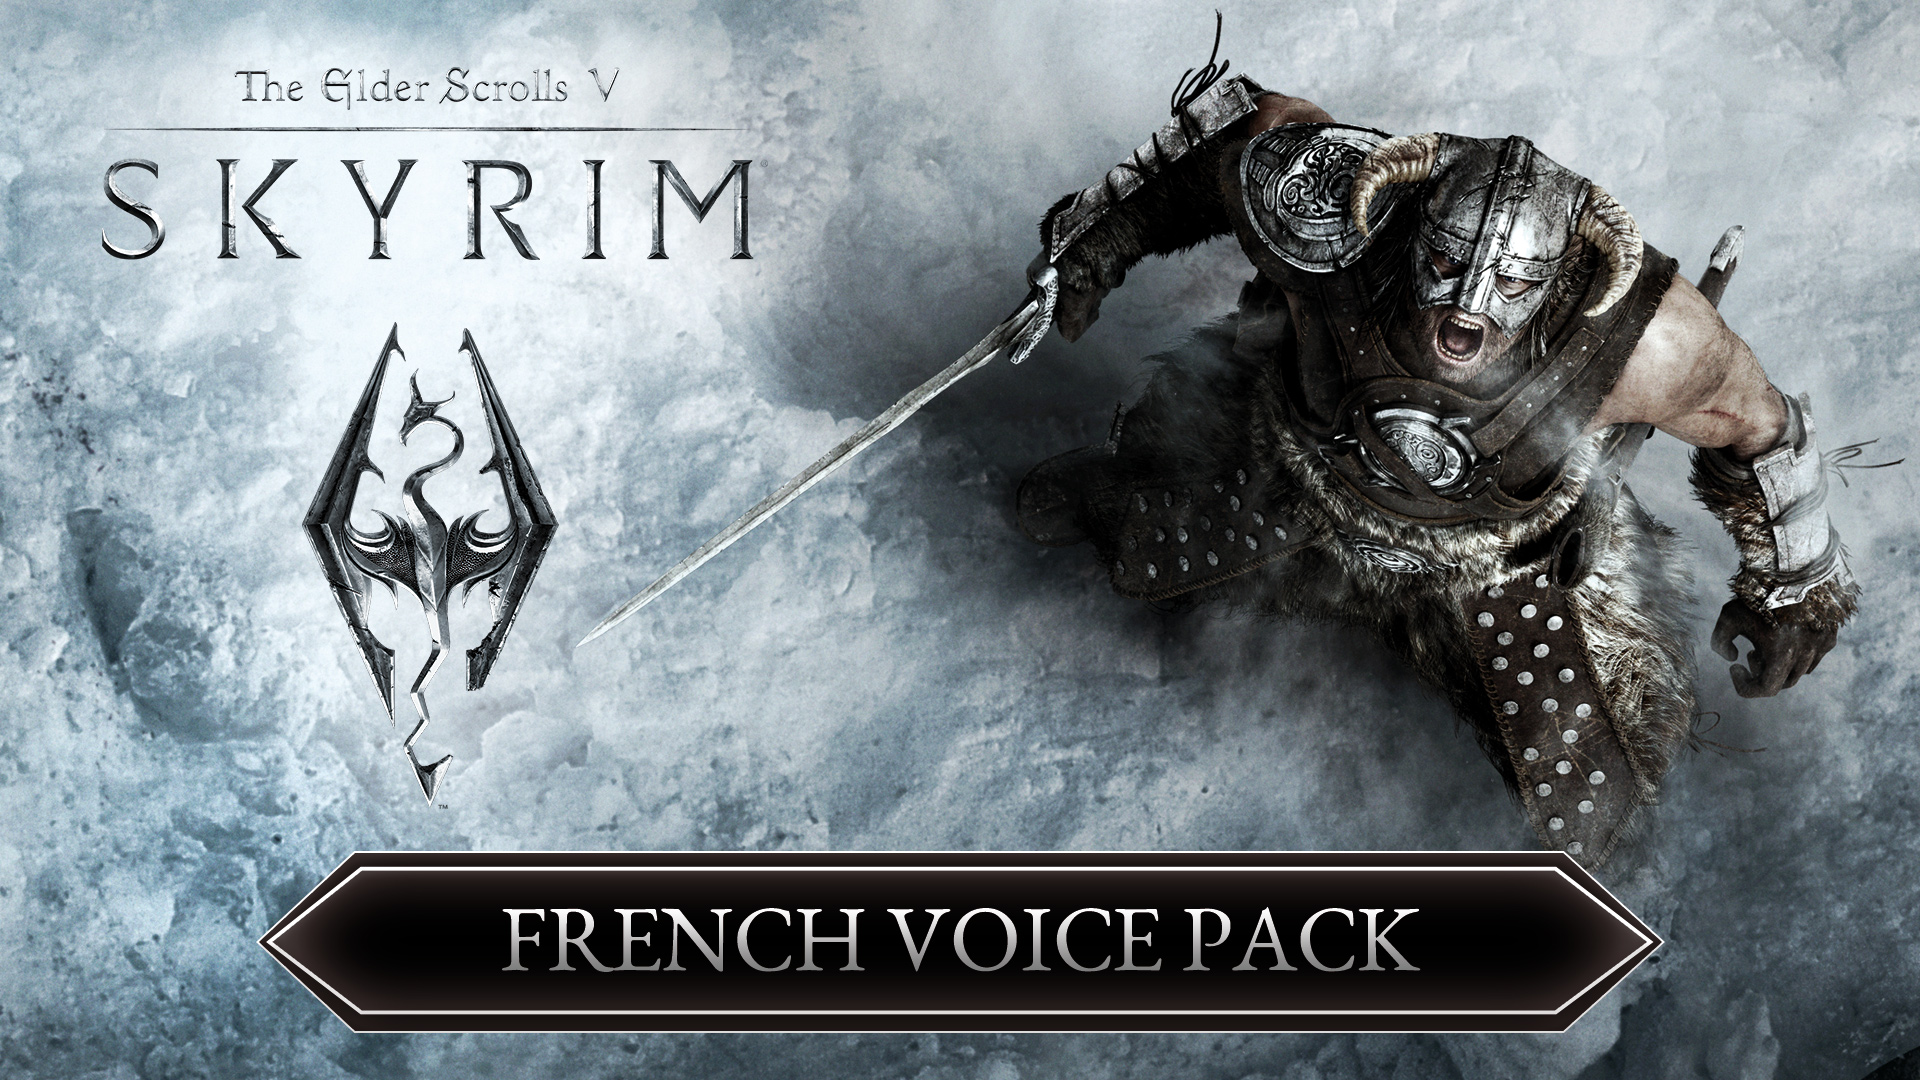 The Elder Scrolls V: Skyrim French Voice Pack